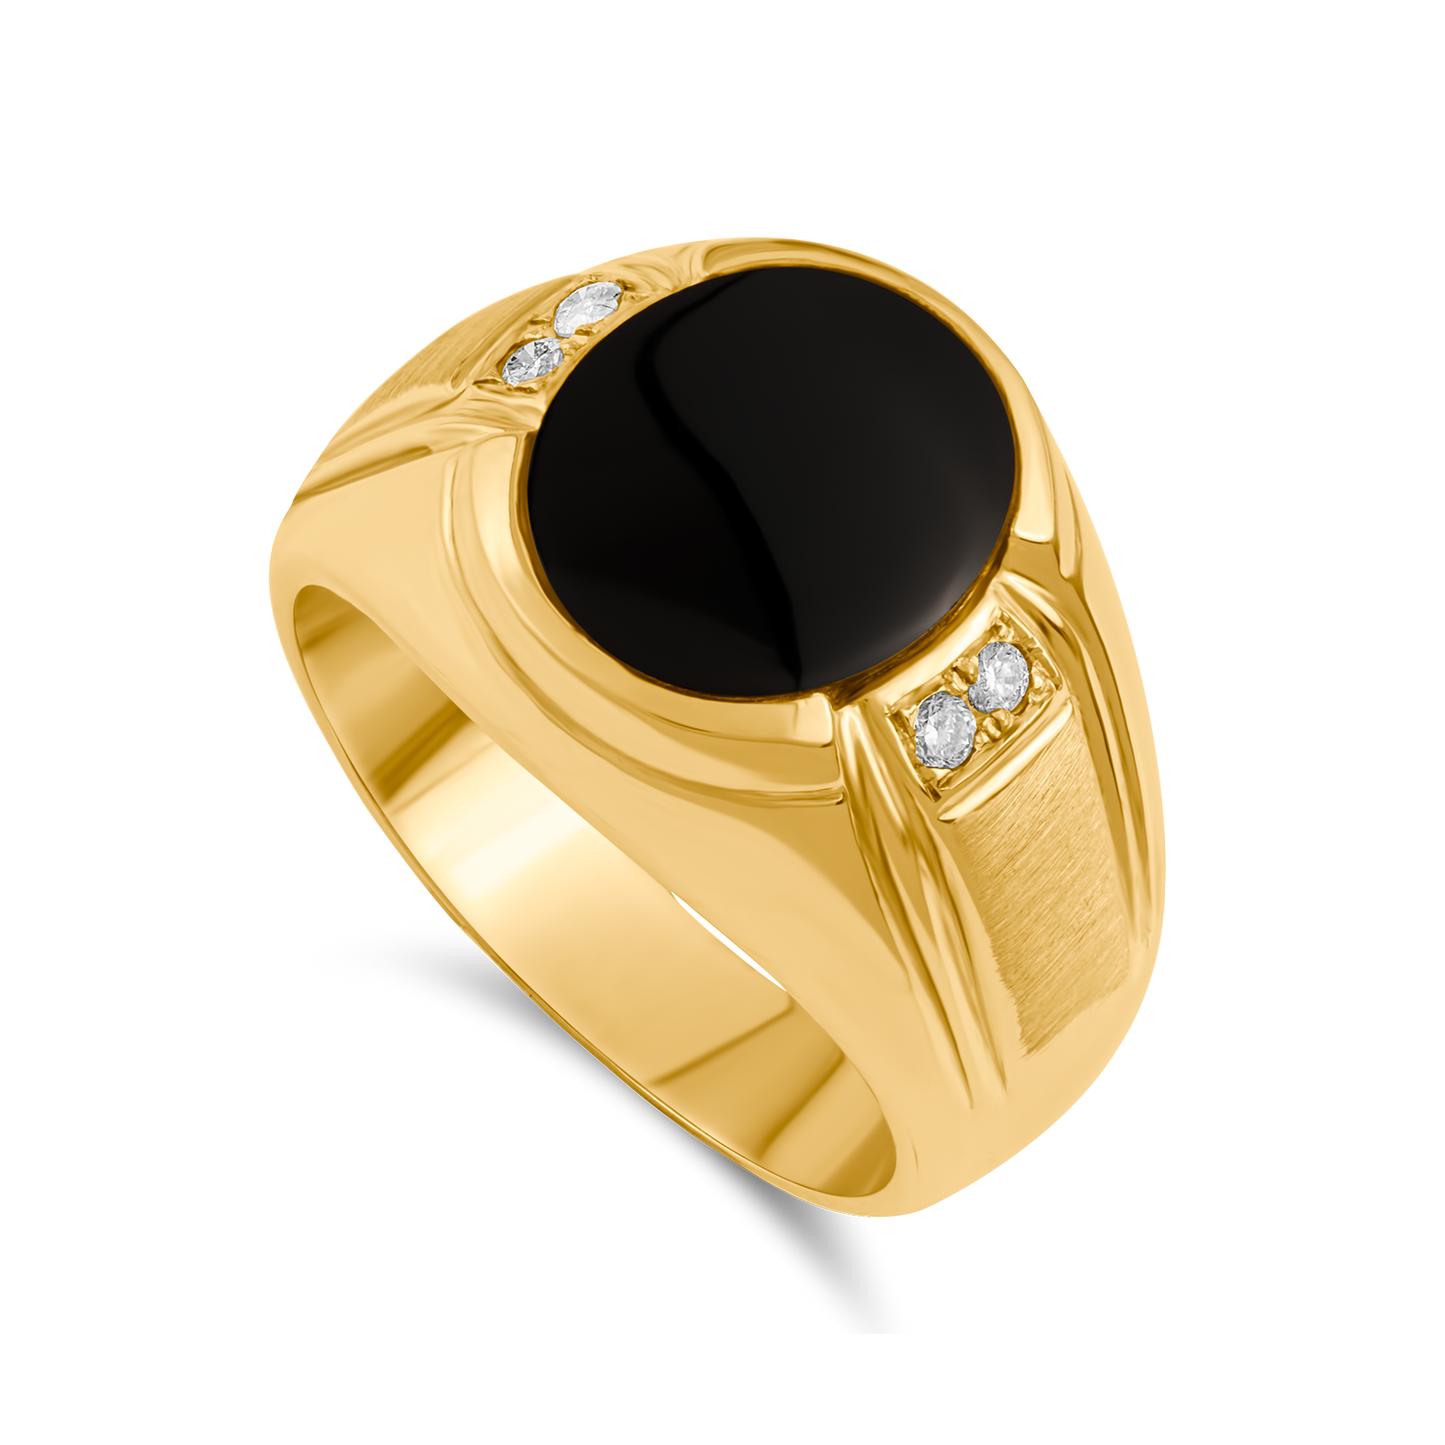 18K Yellow Gold Onyx Men's Ring with Diamonds